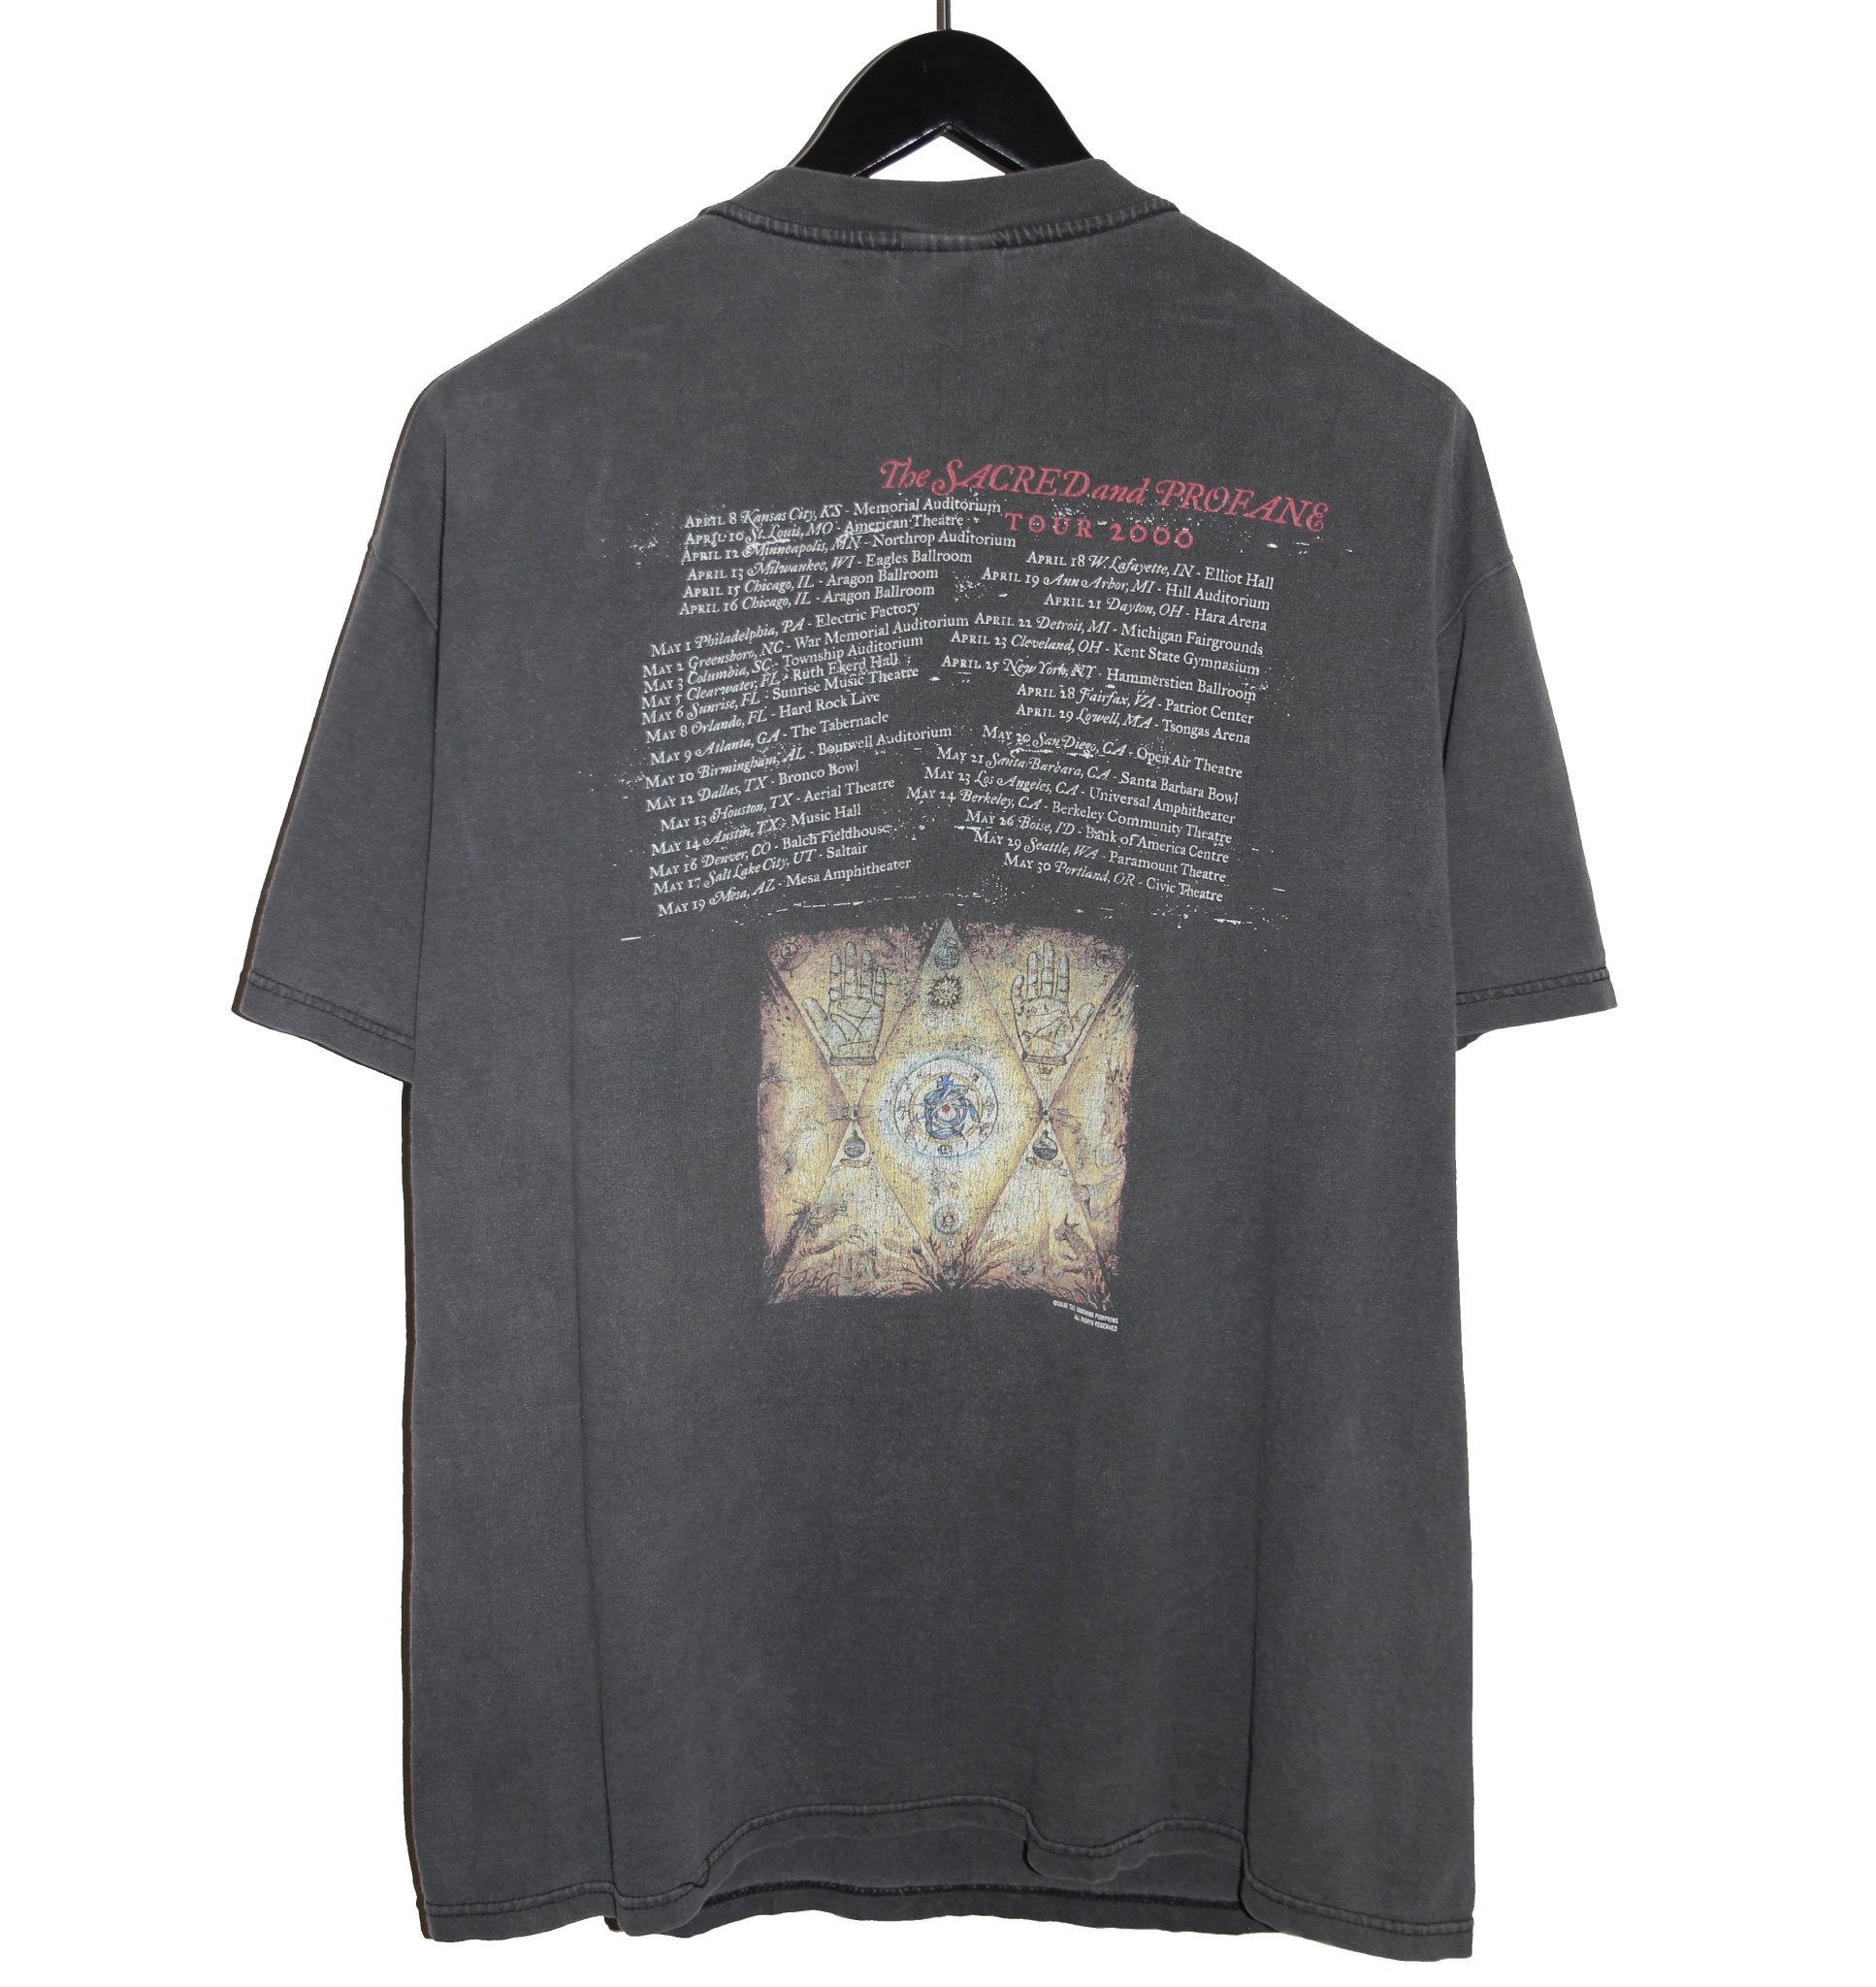 Smashing Pumpkins 2000 Machina/The Machines of God Album Shirt - Faded AU